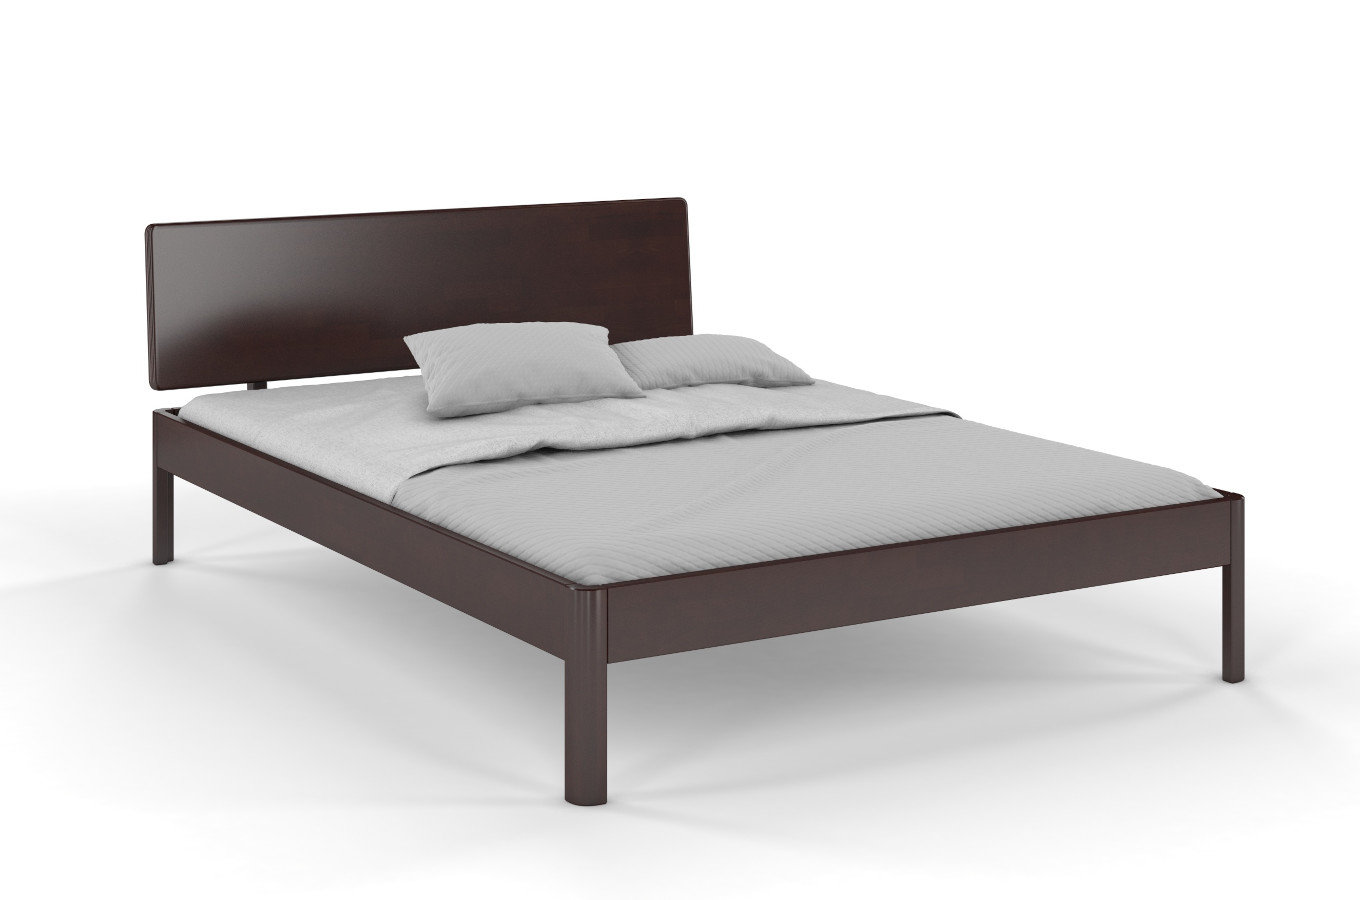  Łóżko drewniane bukowe Visby AMMER / 200x200 cm, kolor palisander